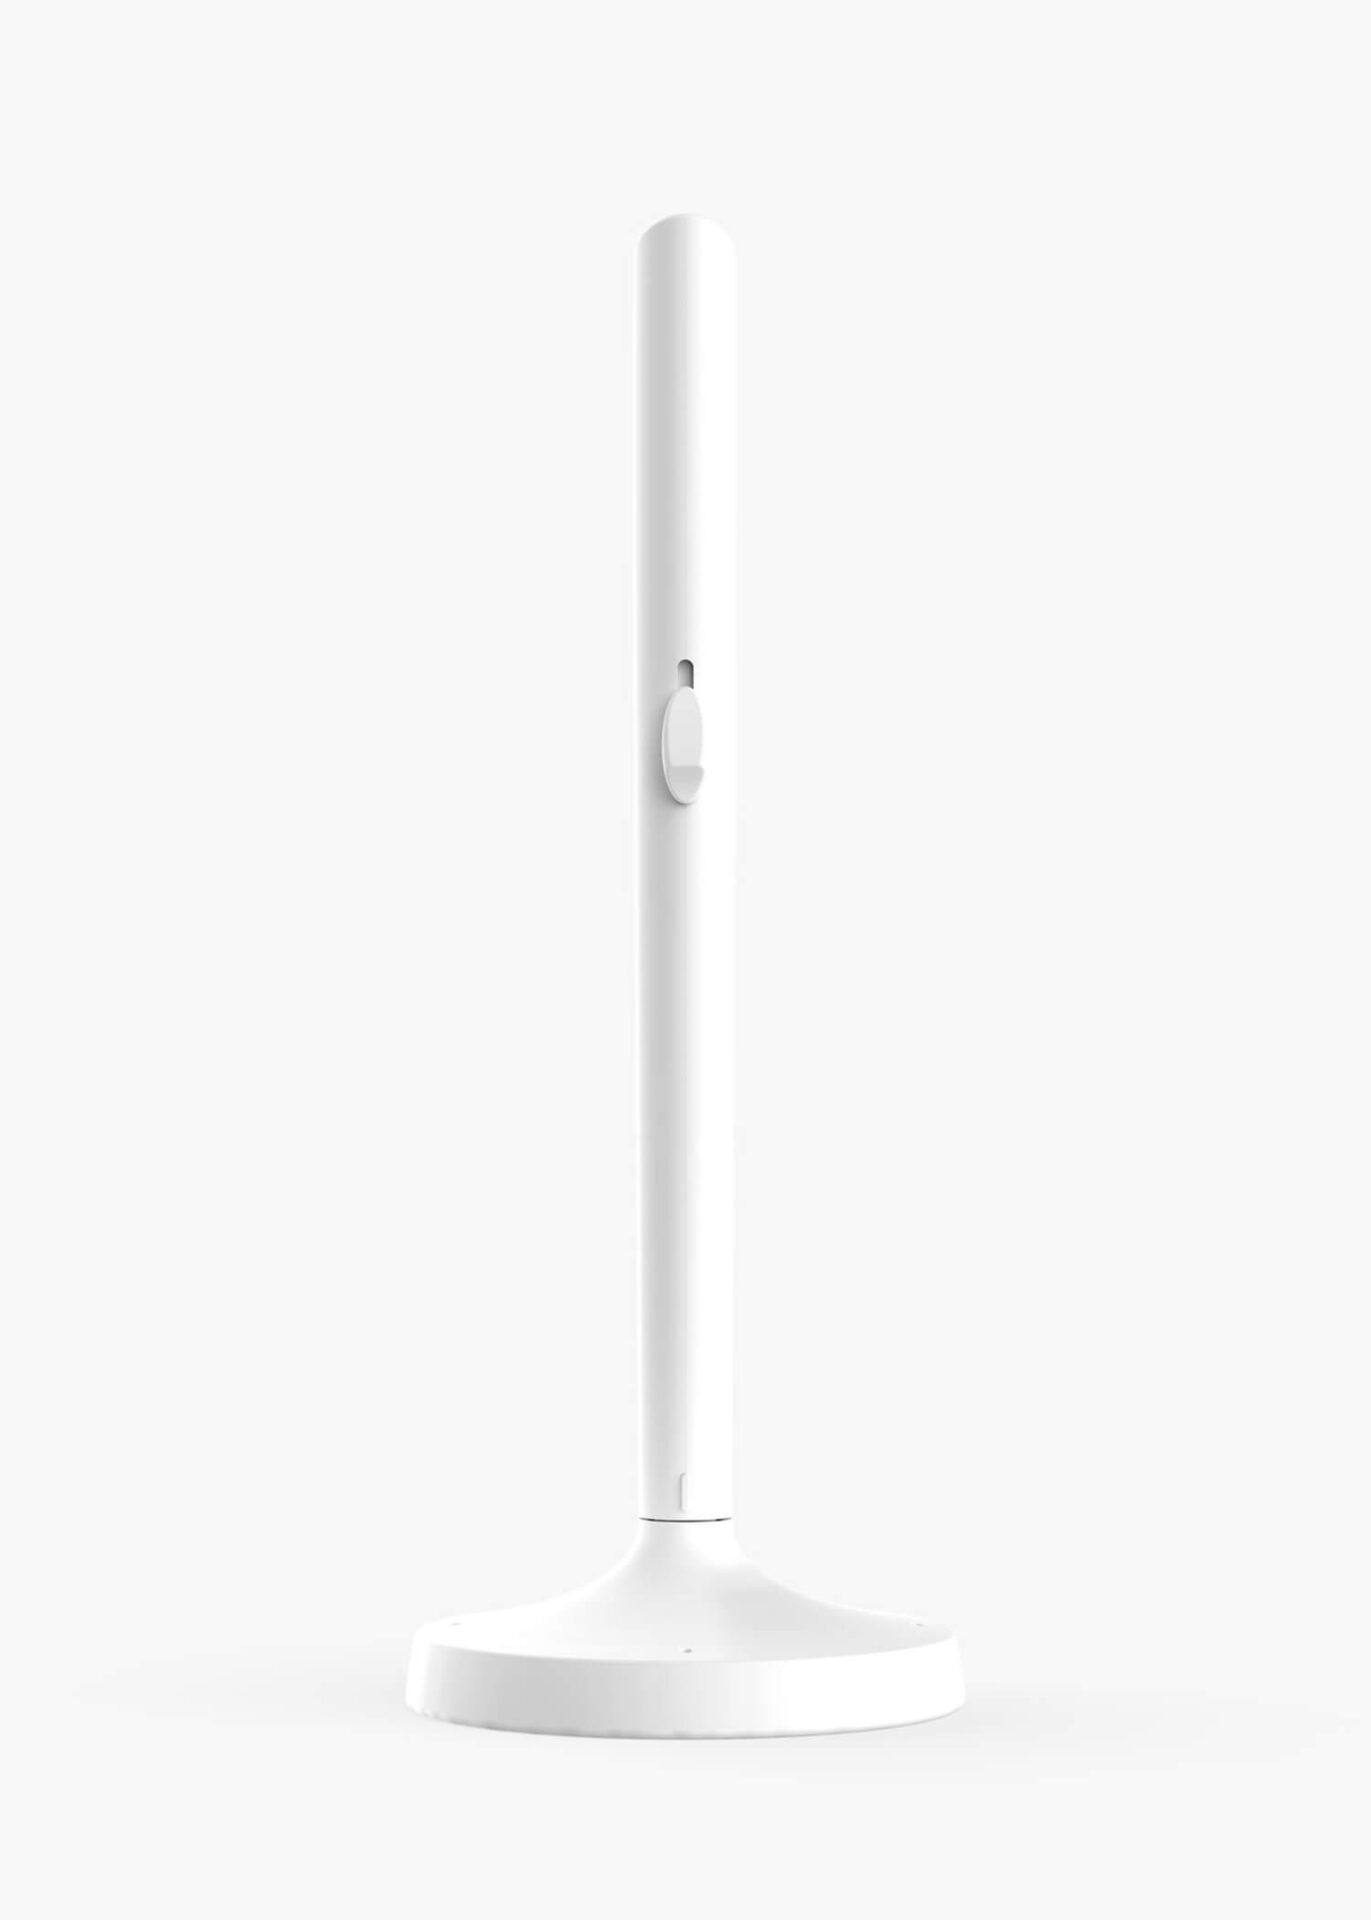 Flushbrush product design handle stand